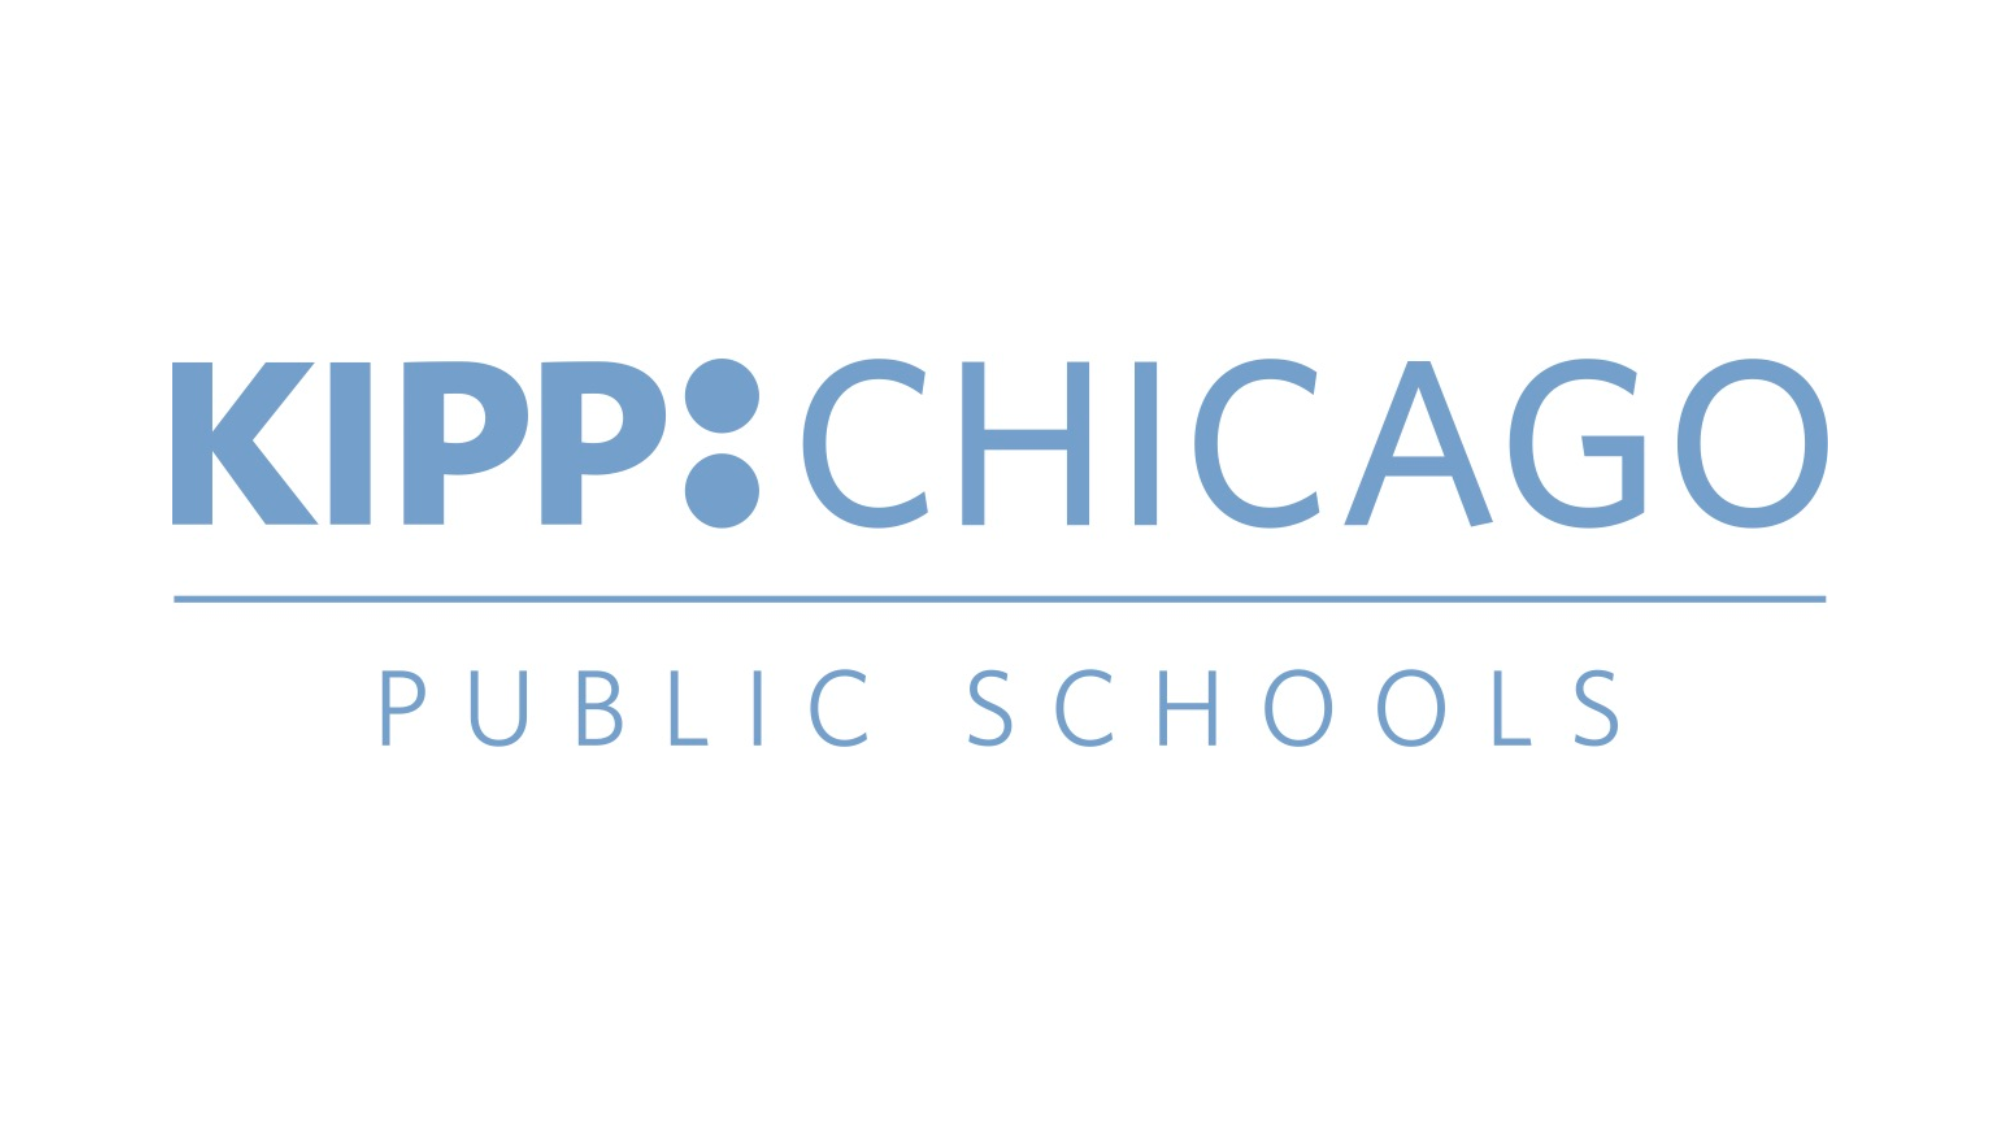 KIPP Chicago